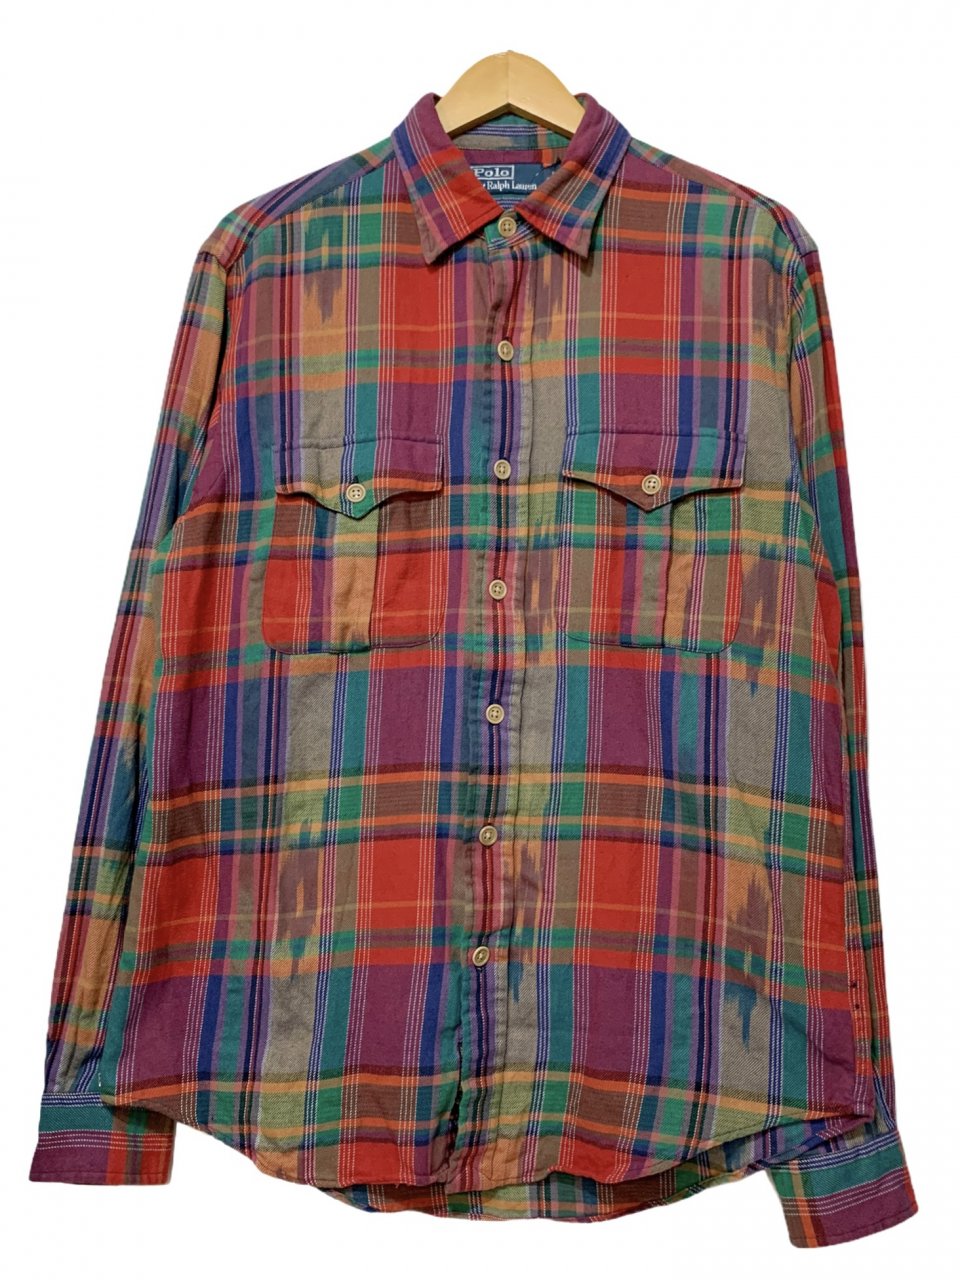 Polo Ralph Lauren Native Check Flannel L/S Shirt 赤 M ポロラルフローレン 長袖シャツ ネルシャツ  チェック柄 ネイティブ柄 レッド 古着 - NEWJOKE ONLINE STORE